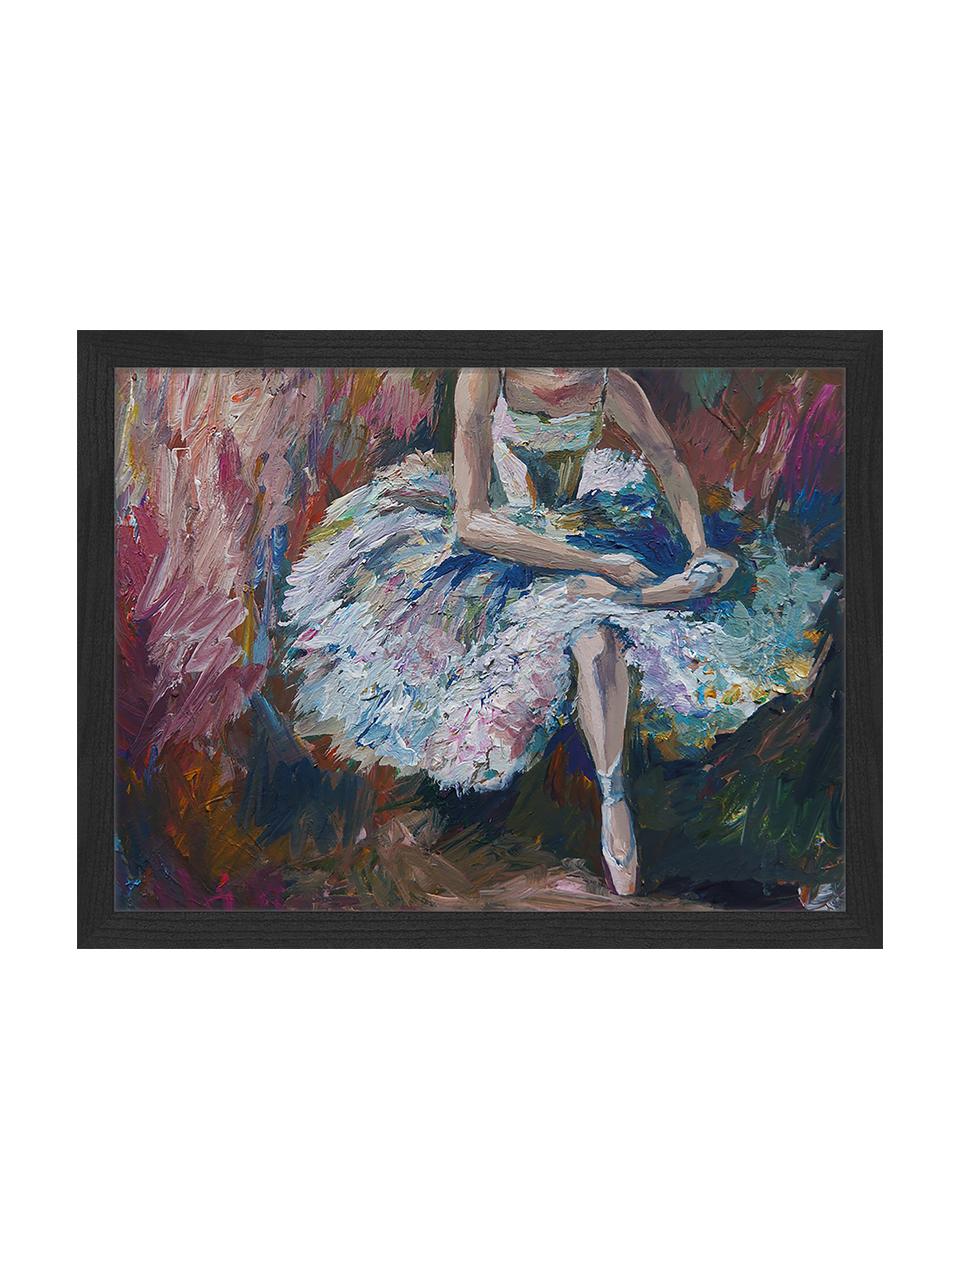 Ingelijste digitale print Ballerina Painting, Afbeelding: digitale print op papier,, Lijst: gelakt hout, Multicolour, 43 x 33 cm